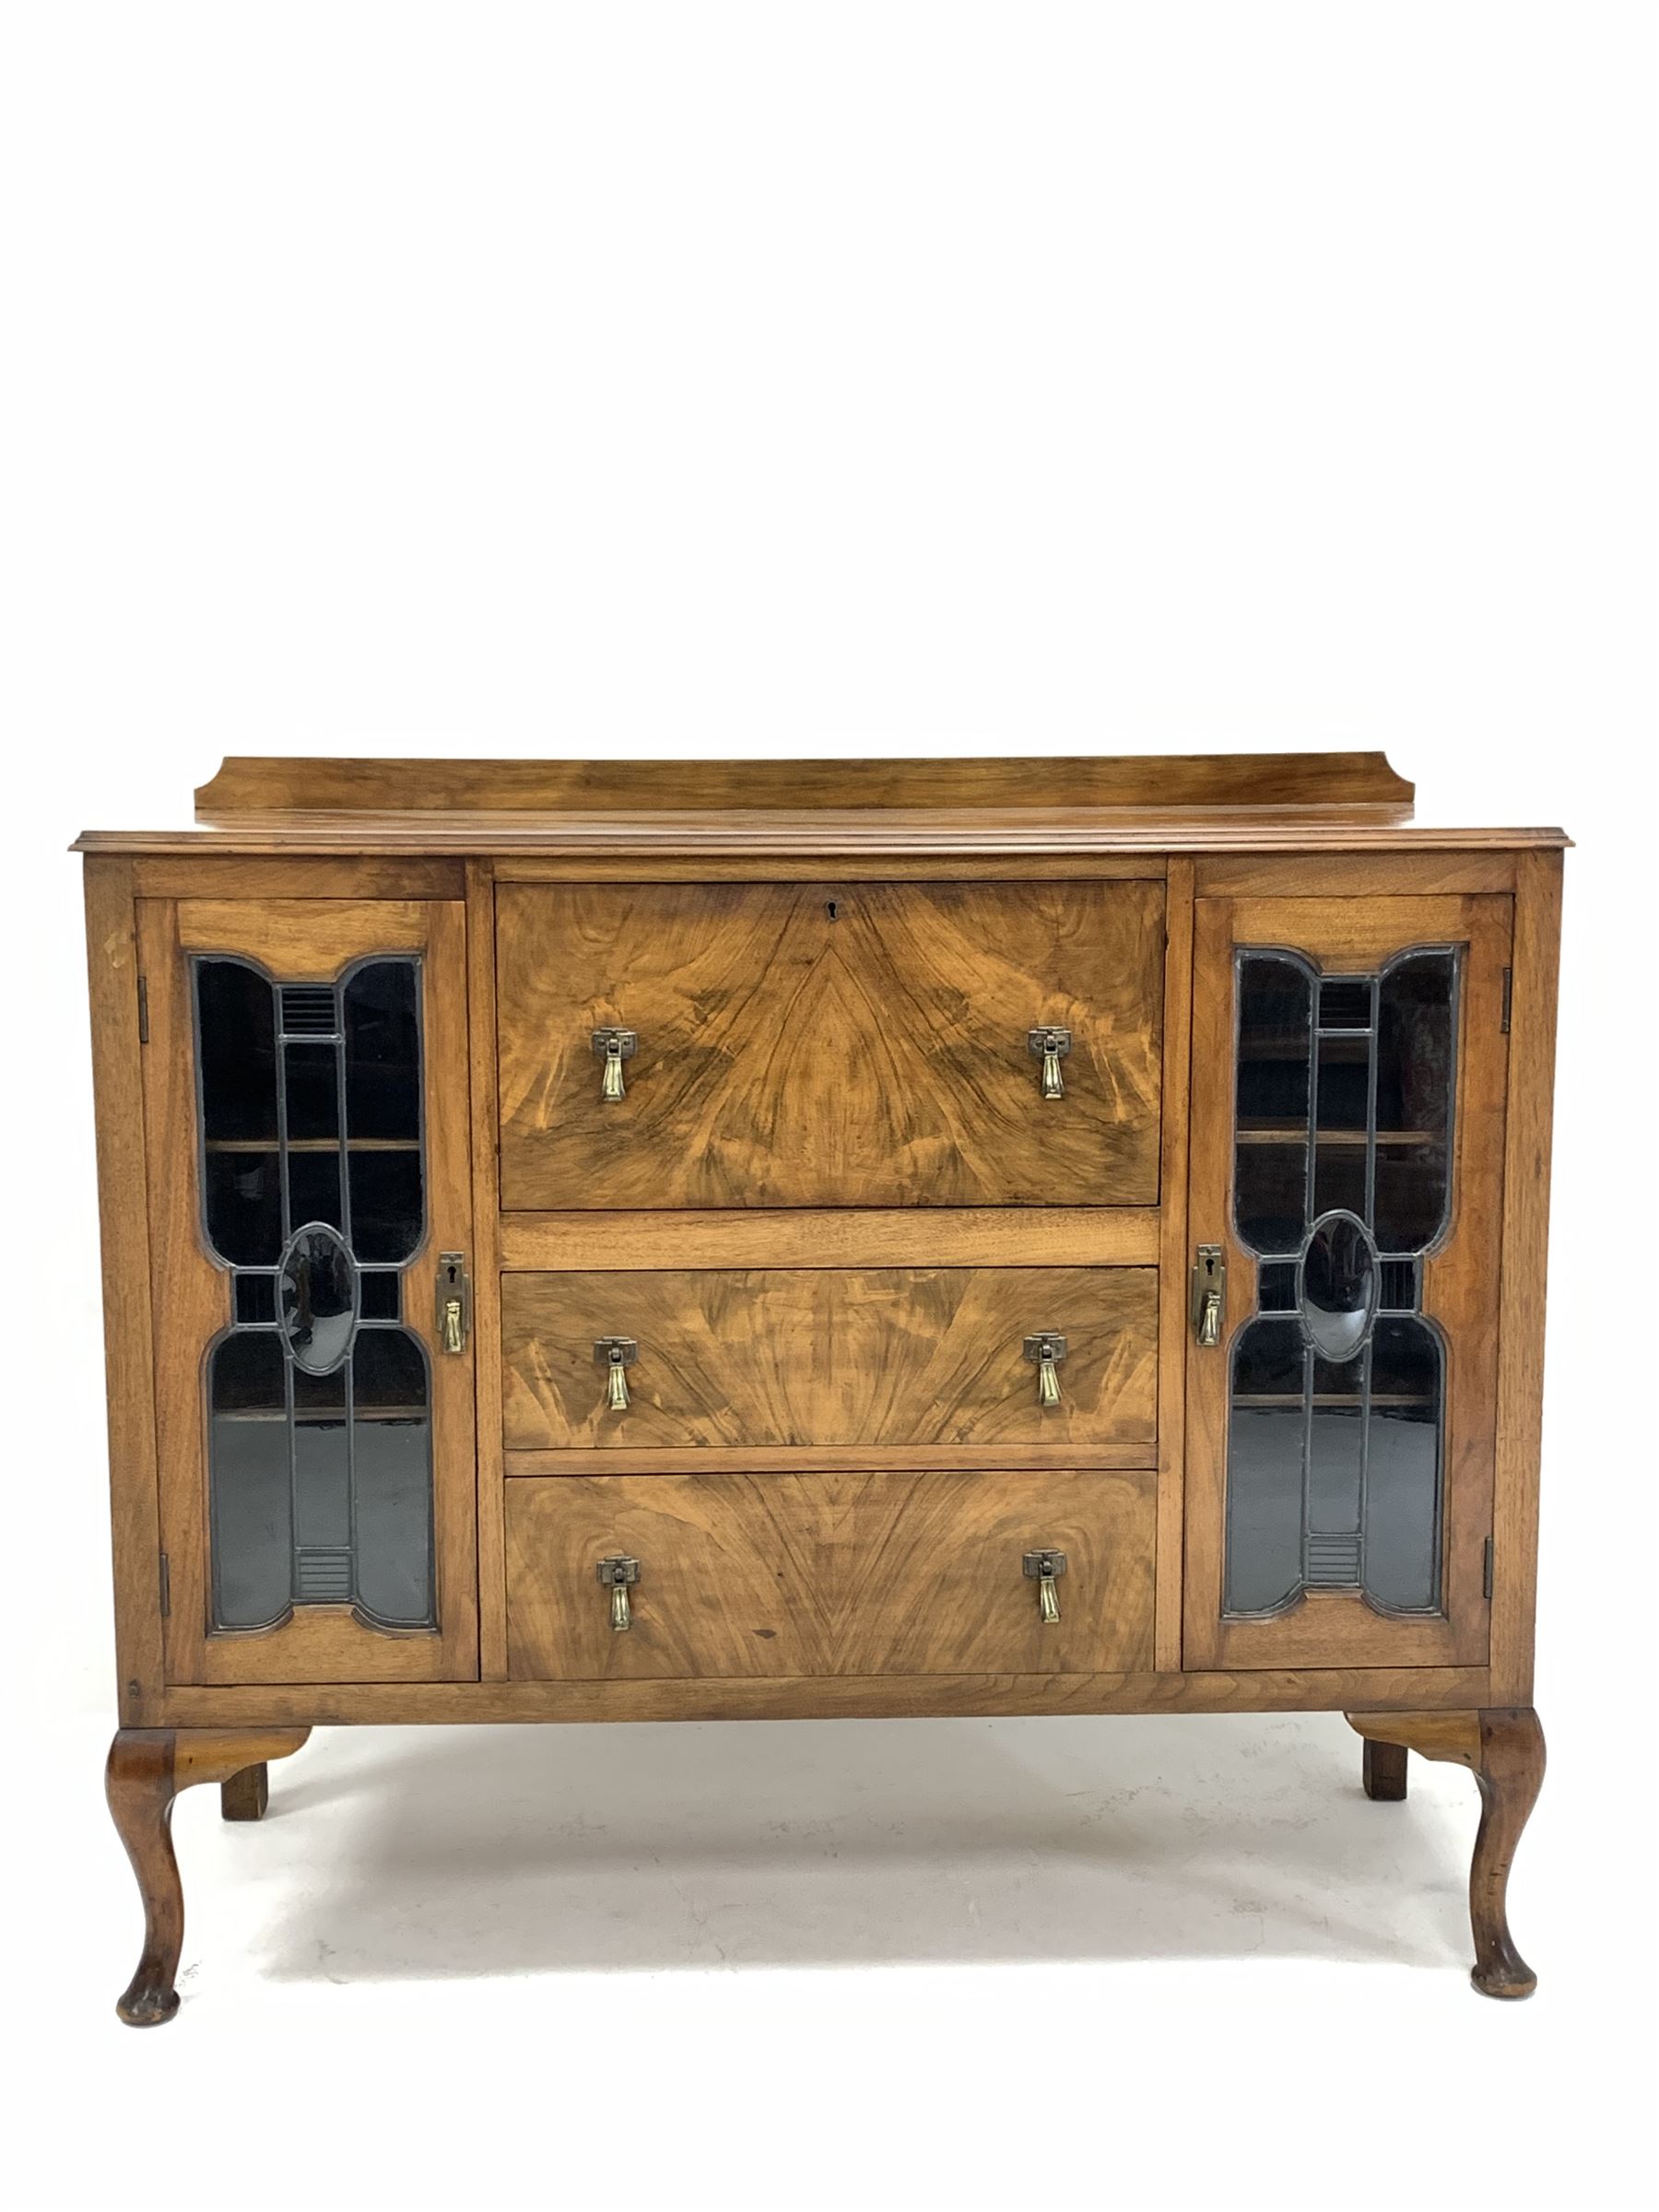 Early 20th century walnut bureau display cabinet